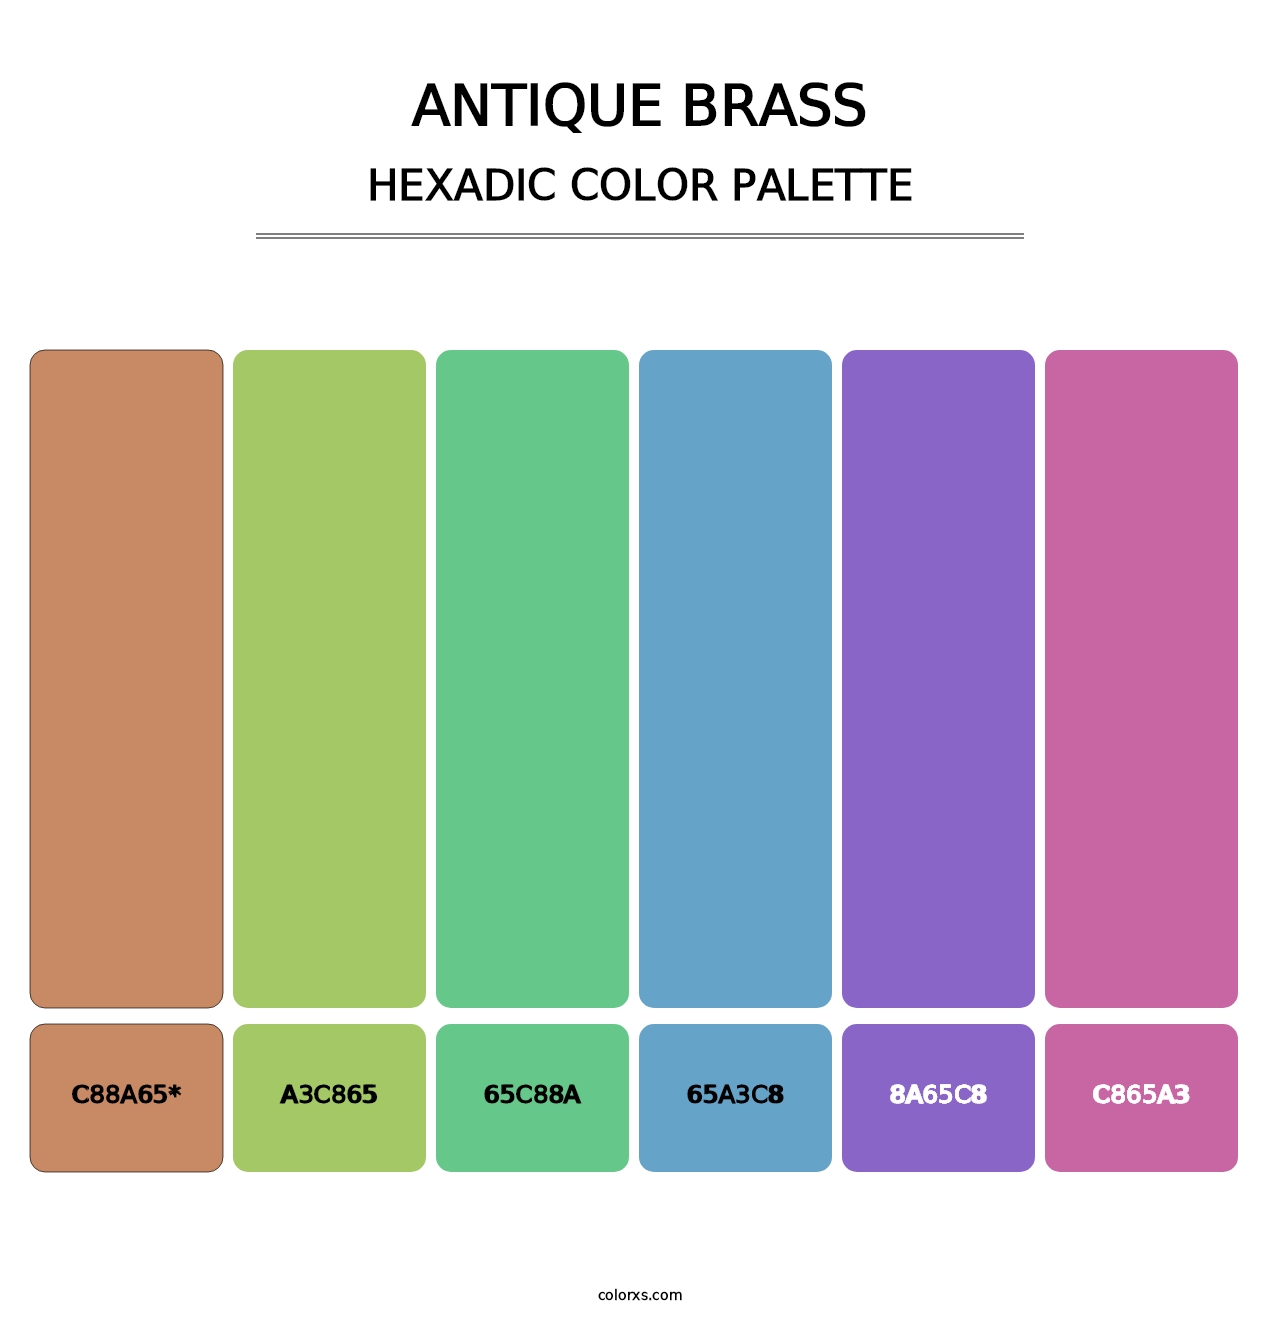 Antique Brass - Hexadic Color Palette